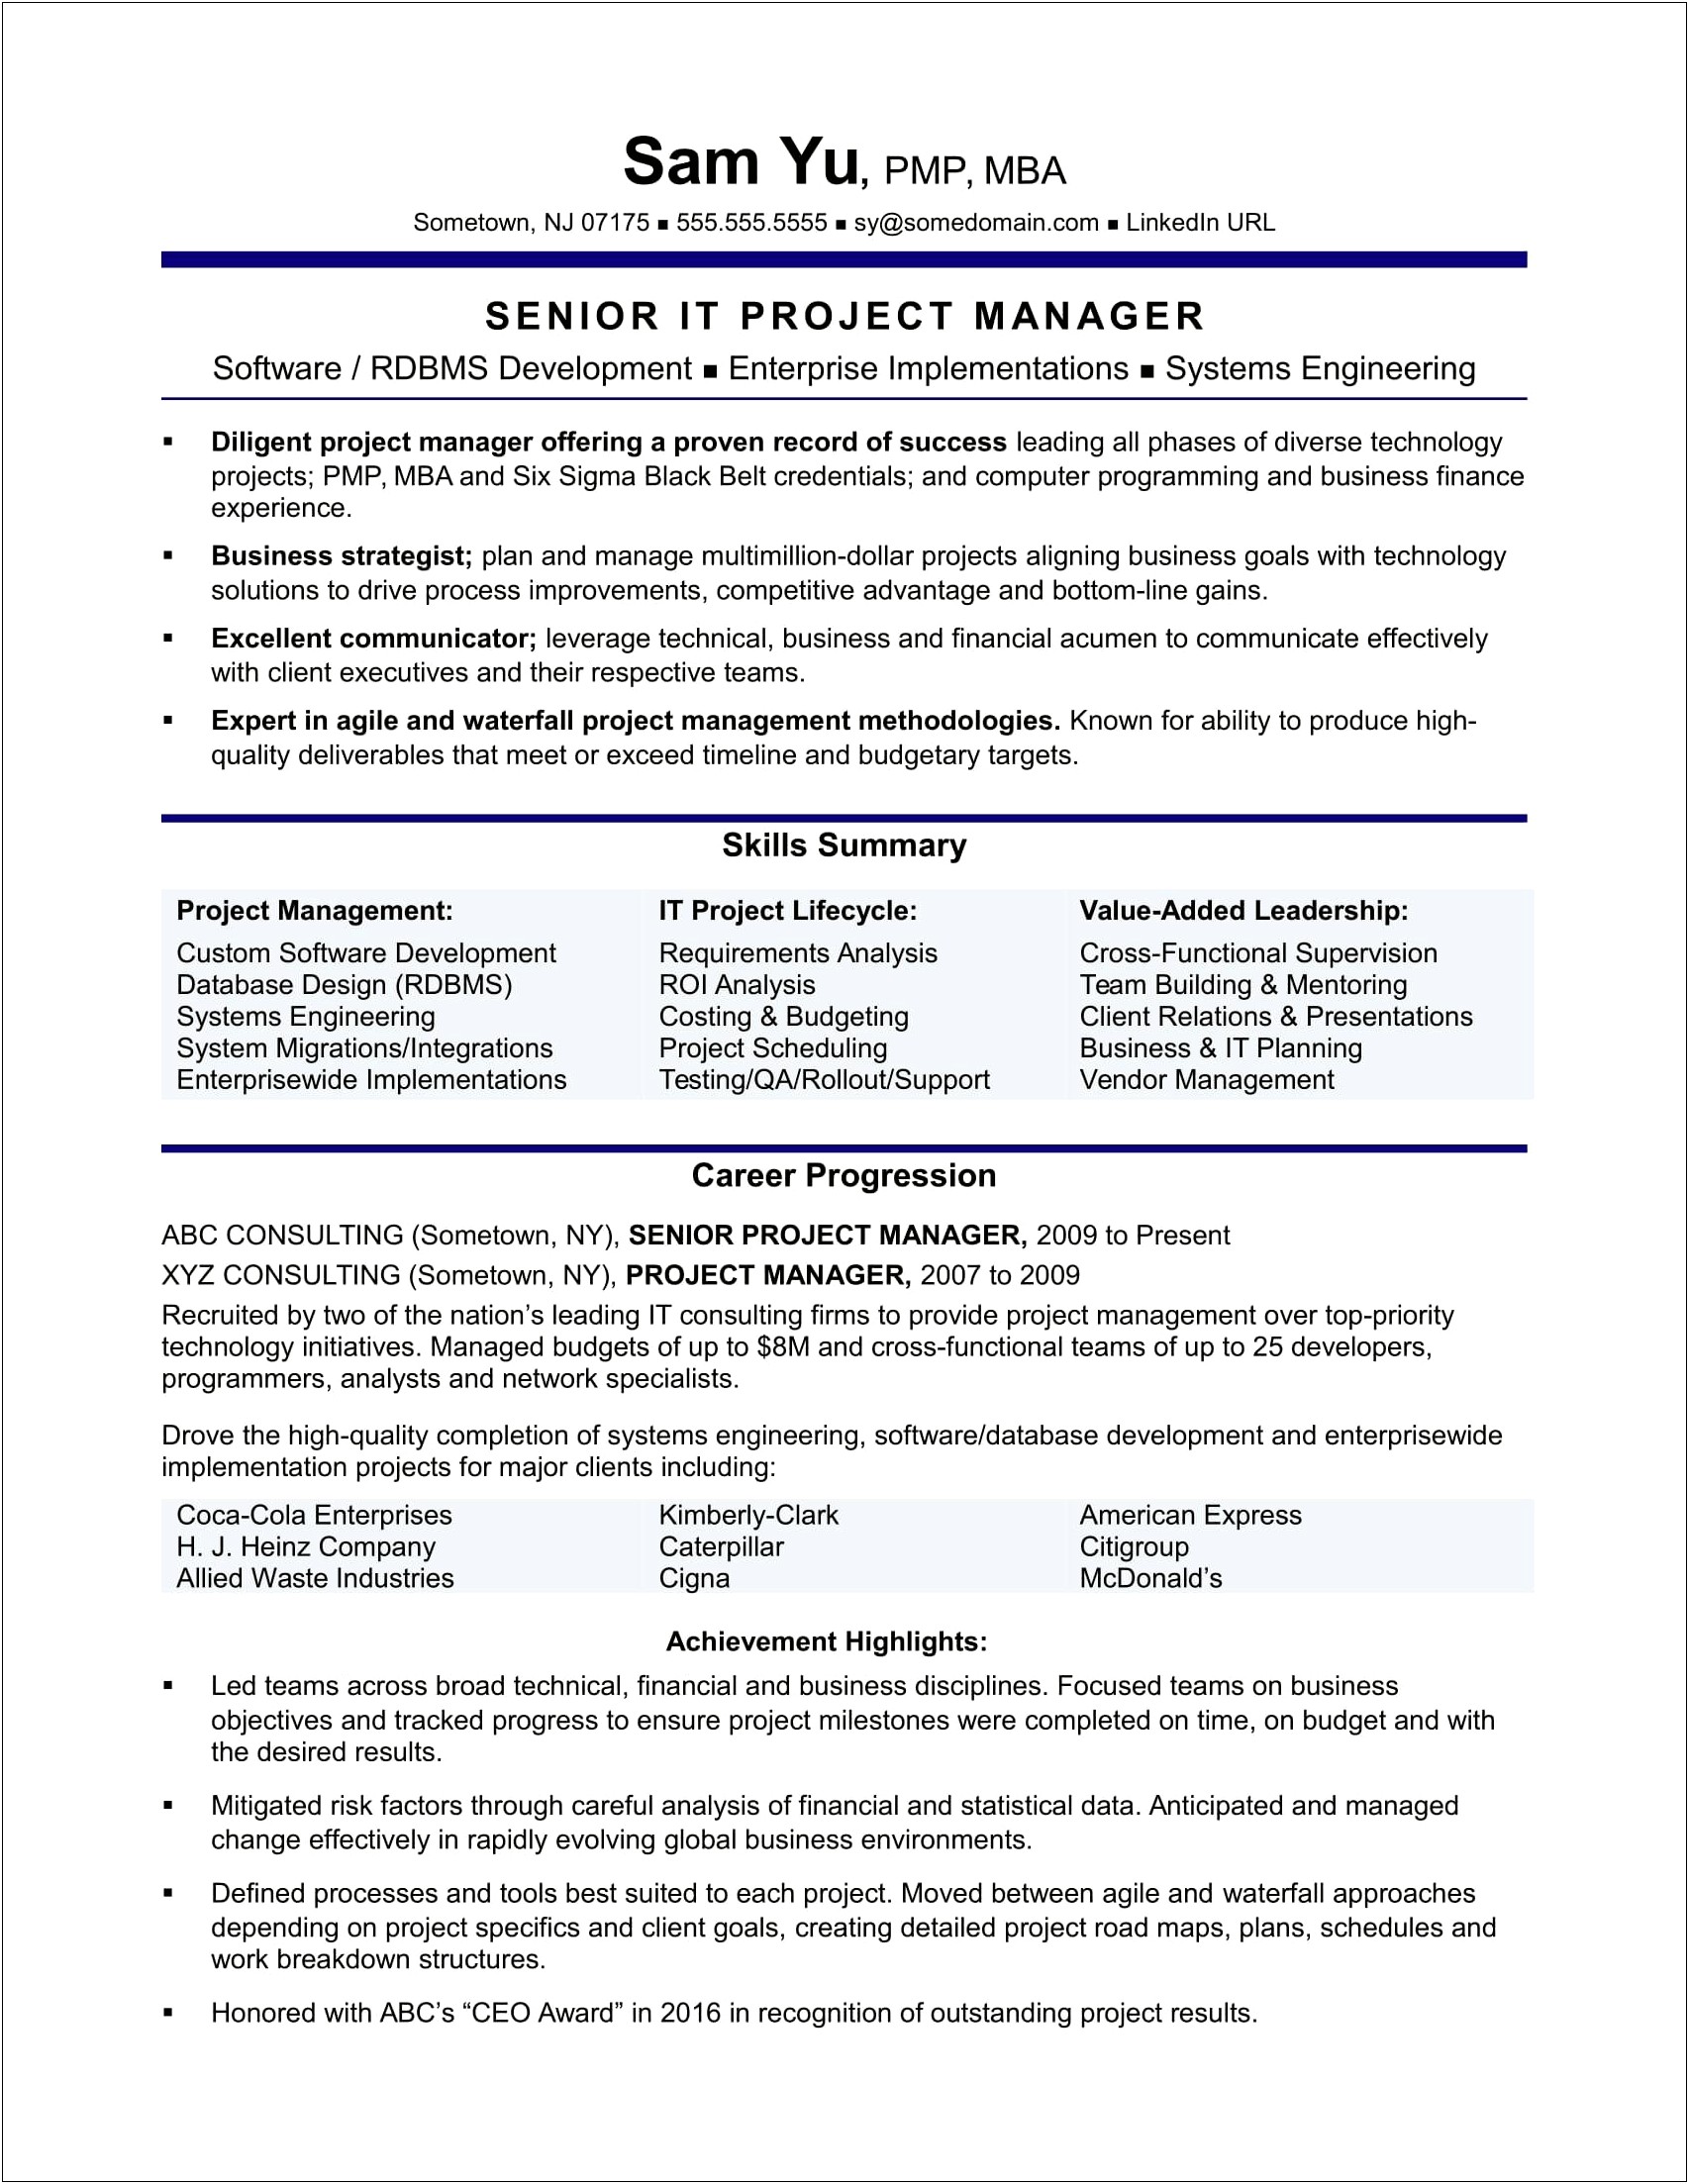 Senior Level Management Professional Resume Sample